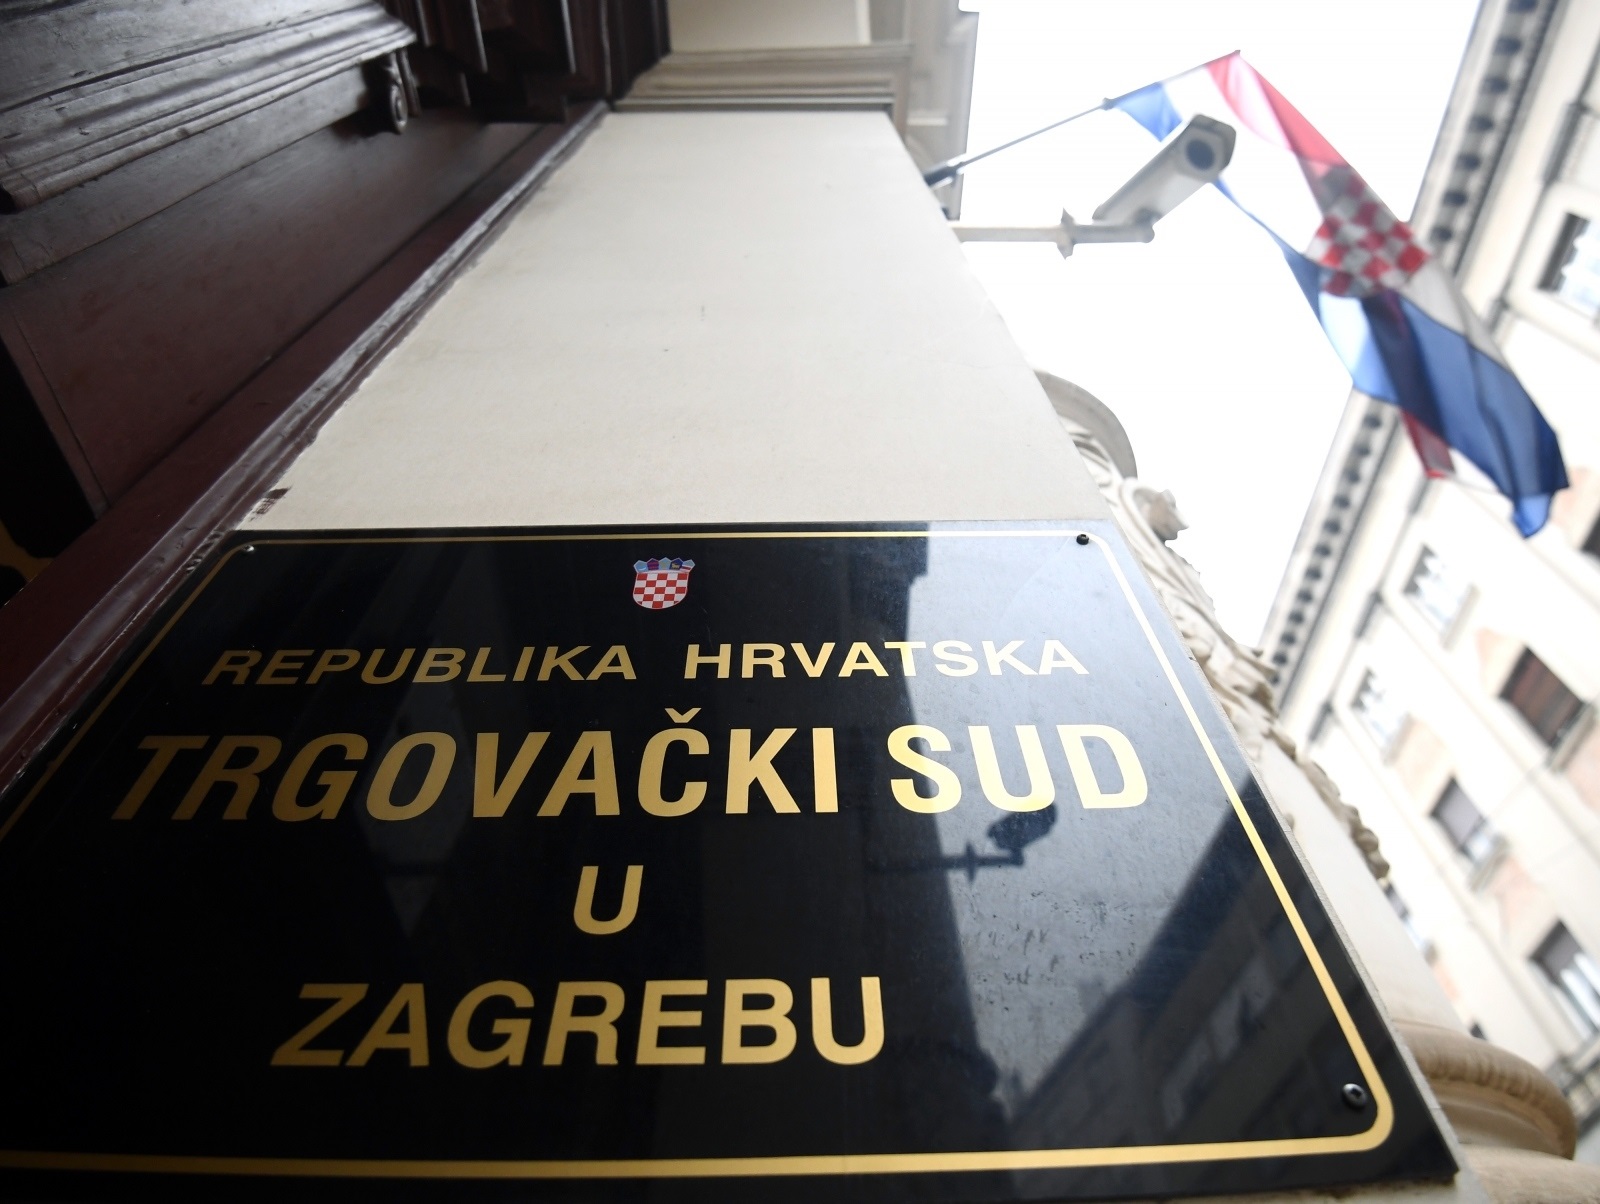 17.02.2021., Zagreb - Zgrada Trgovackog suda u Zagrebu.
Photo: Marko Lukunic/PIXSELL